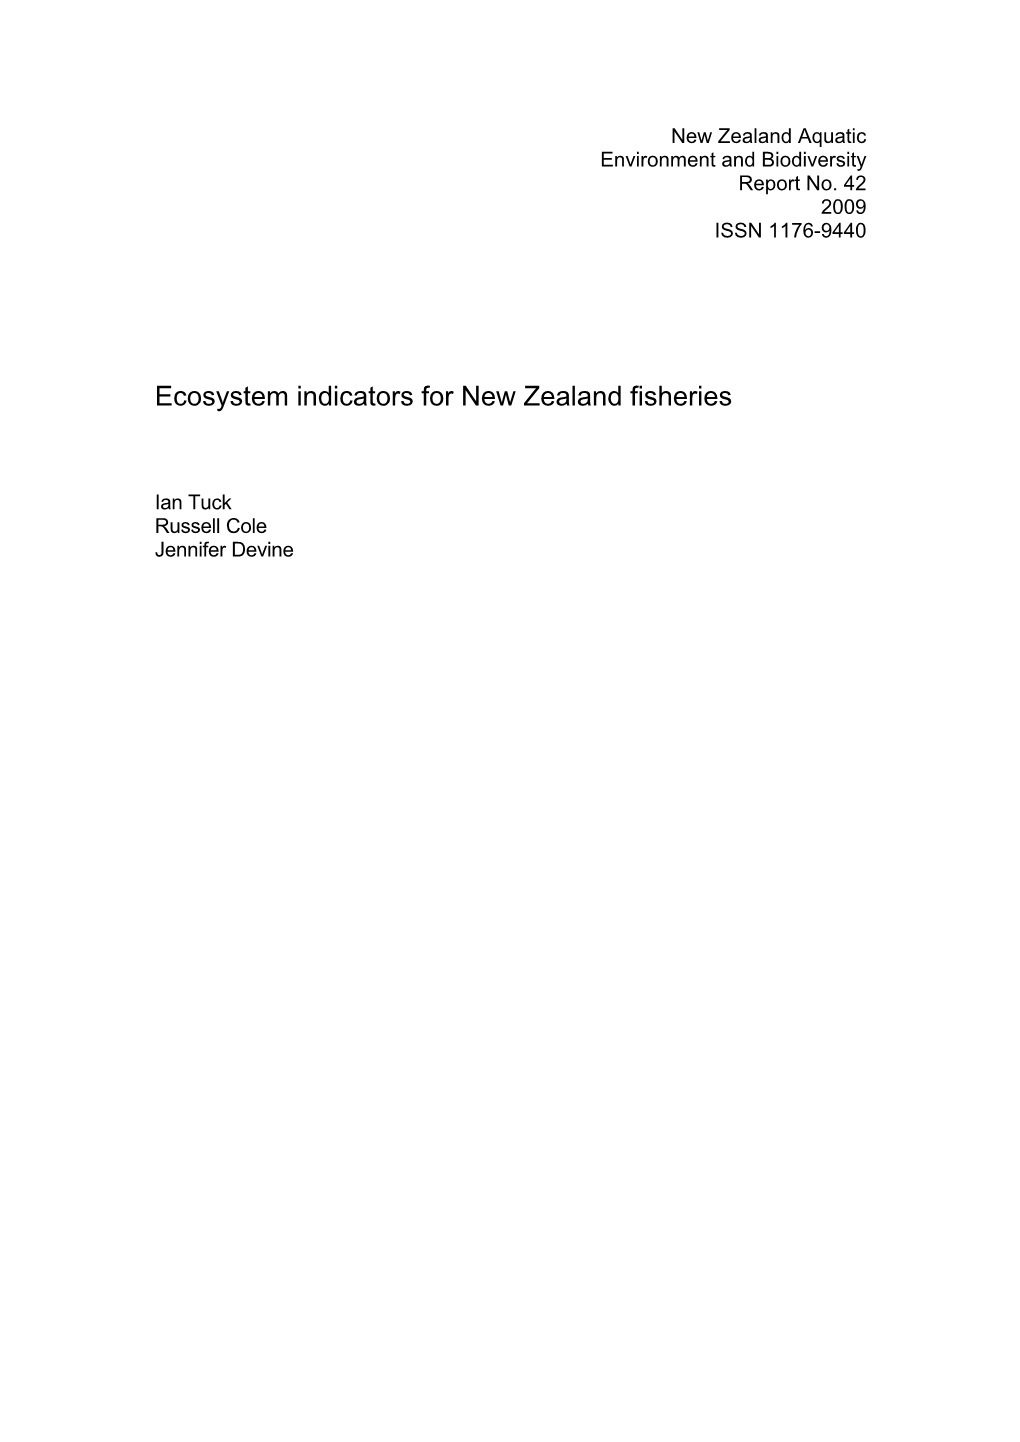 Ecosystem Indicators for New Zealand Fisheries